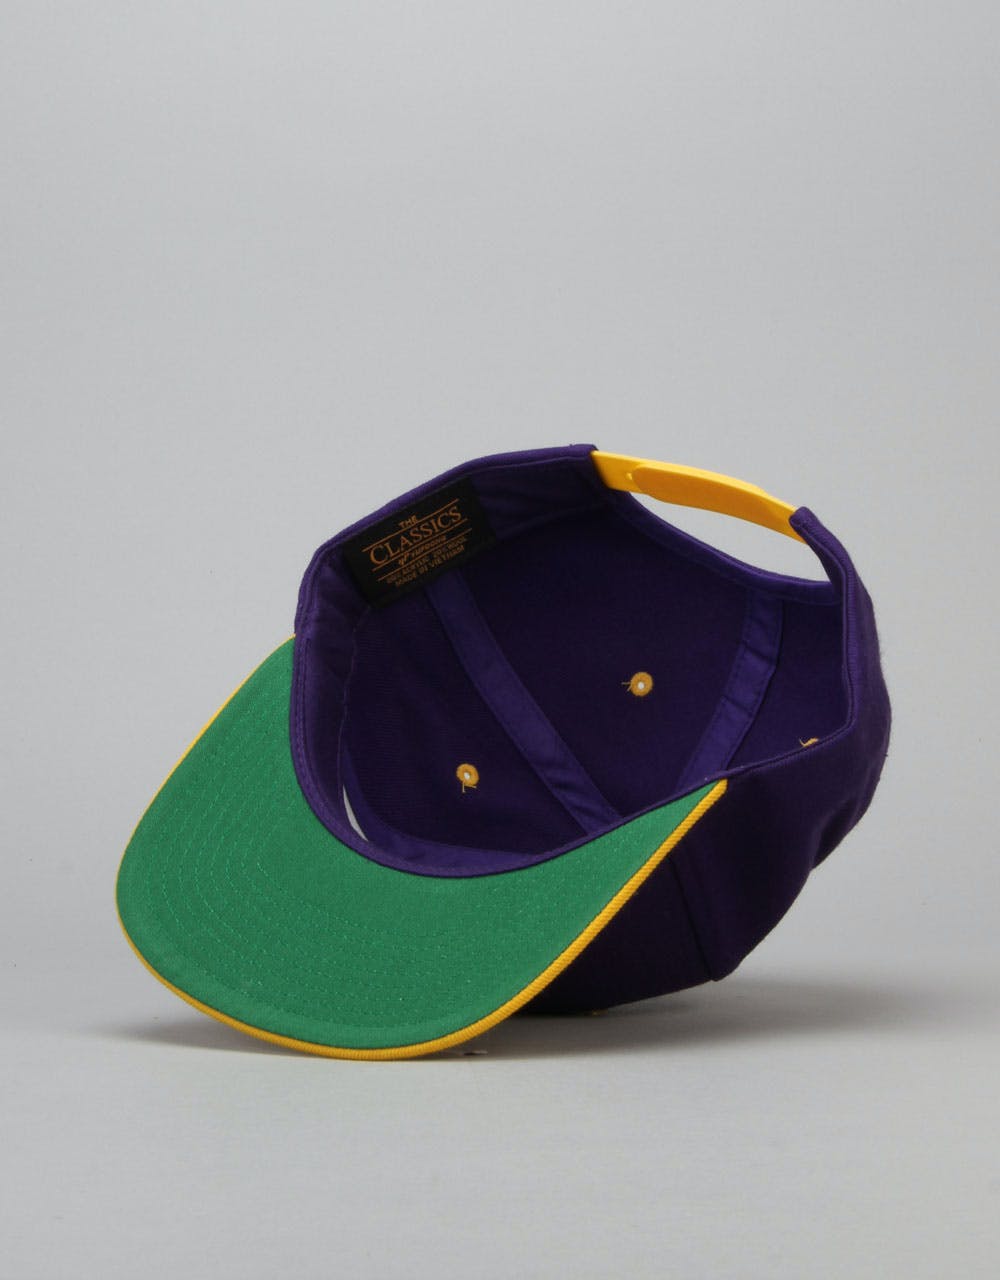 R1 Basics Two Tone Snapback Cap - Purple/Gold